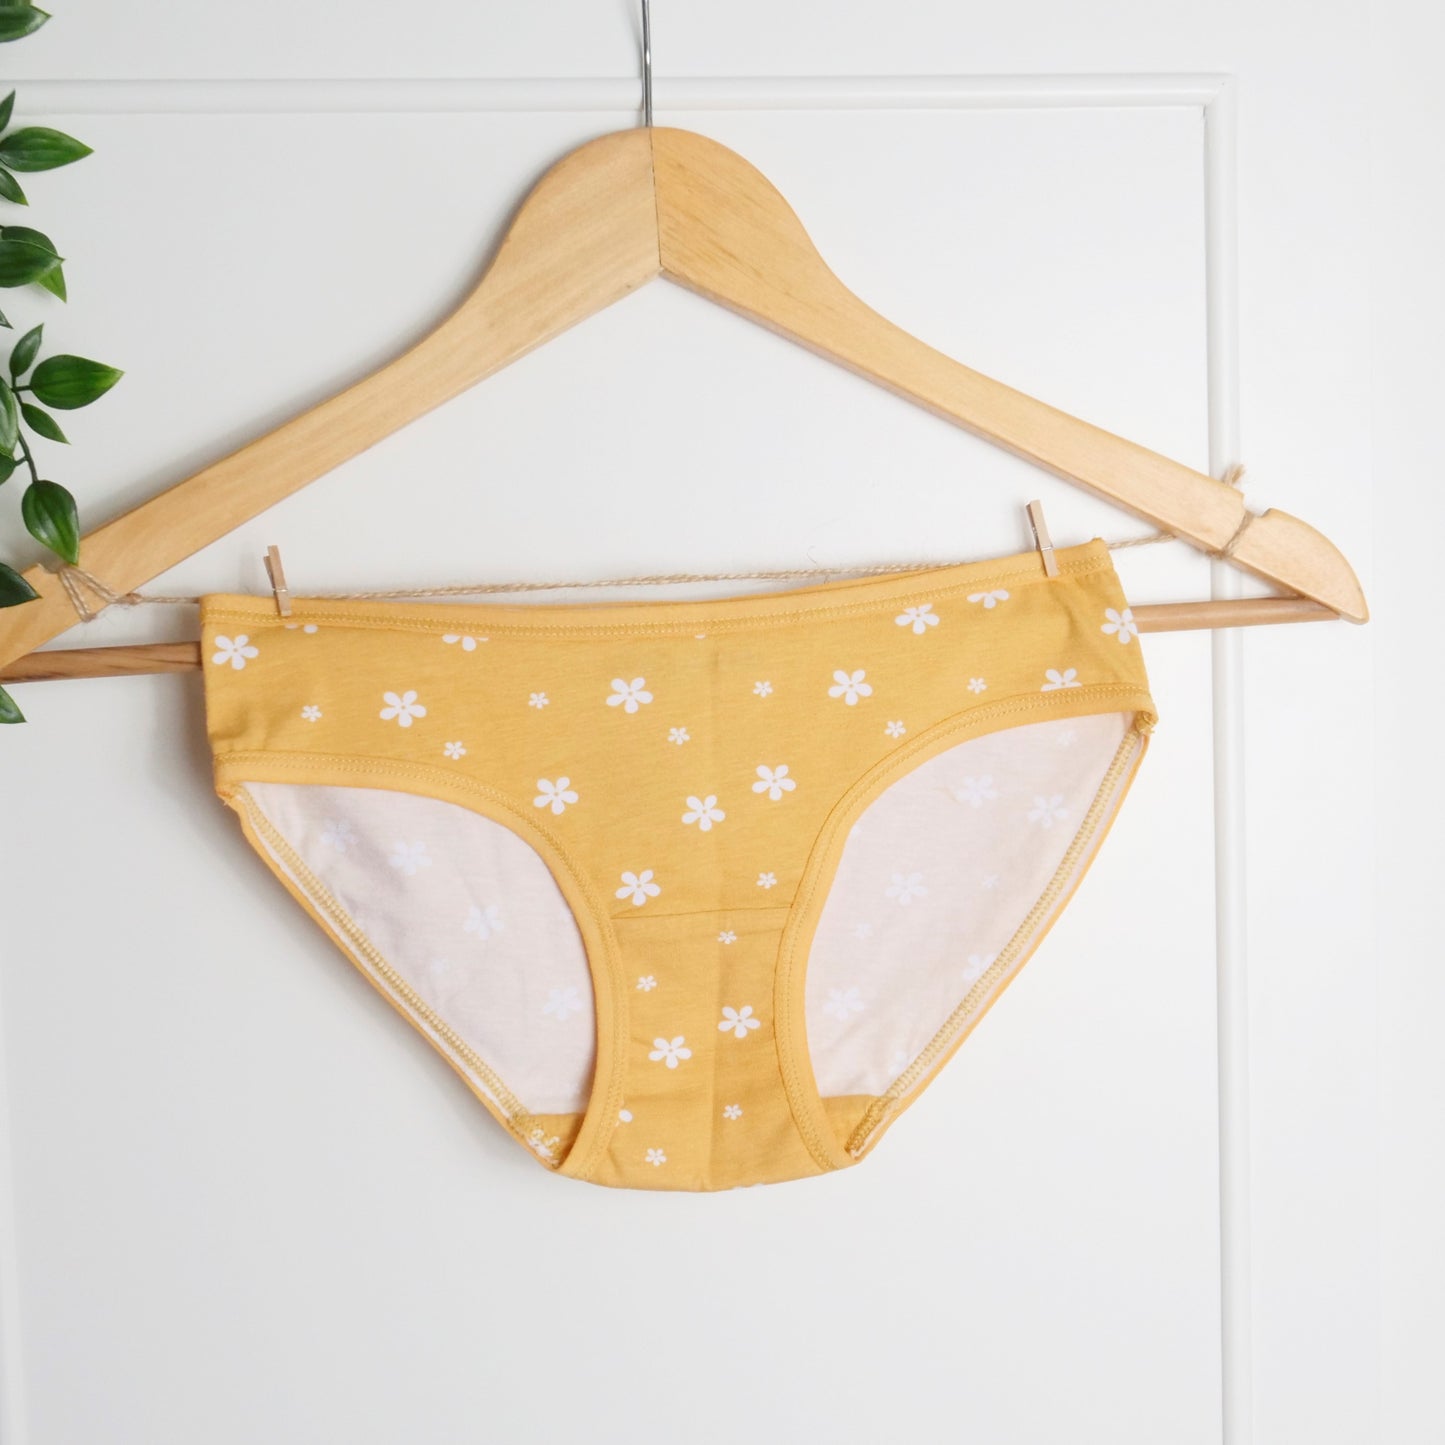 Women's organic cotton low-rise bikini bottoms - yellow with white flowers